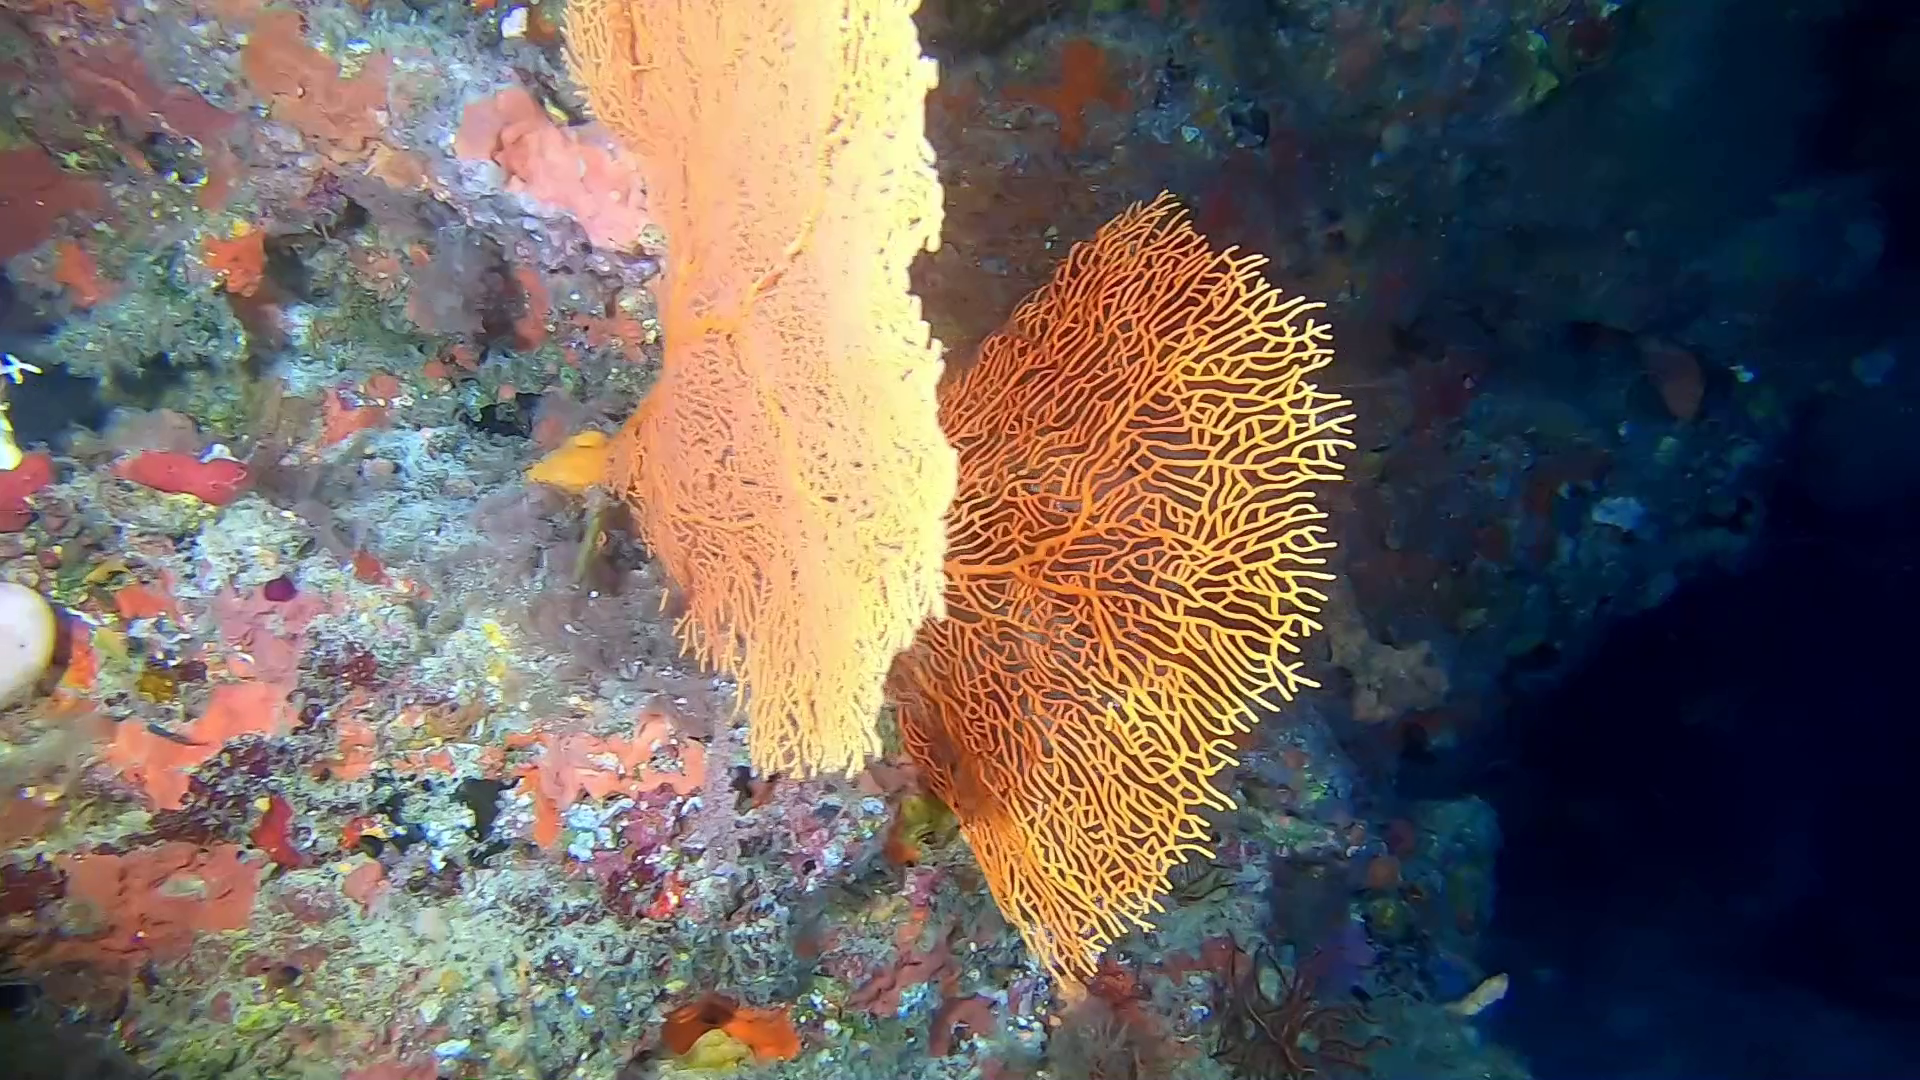 Gorgonia a Ventaglio gigante - Sea Whip coral - Subergorgia hiksoni - intotheblue.it